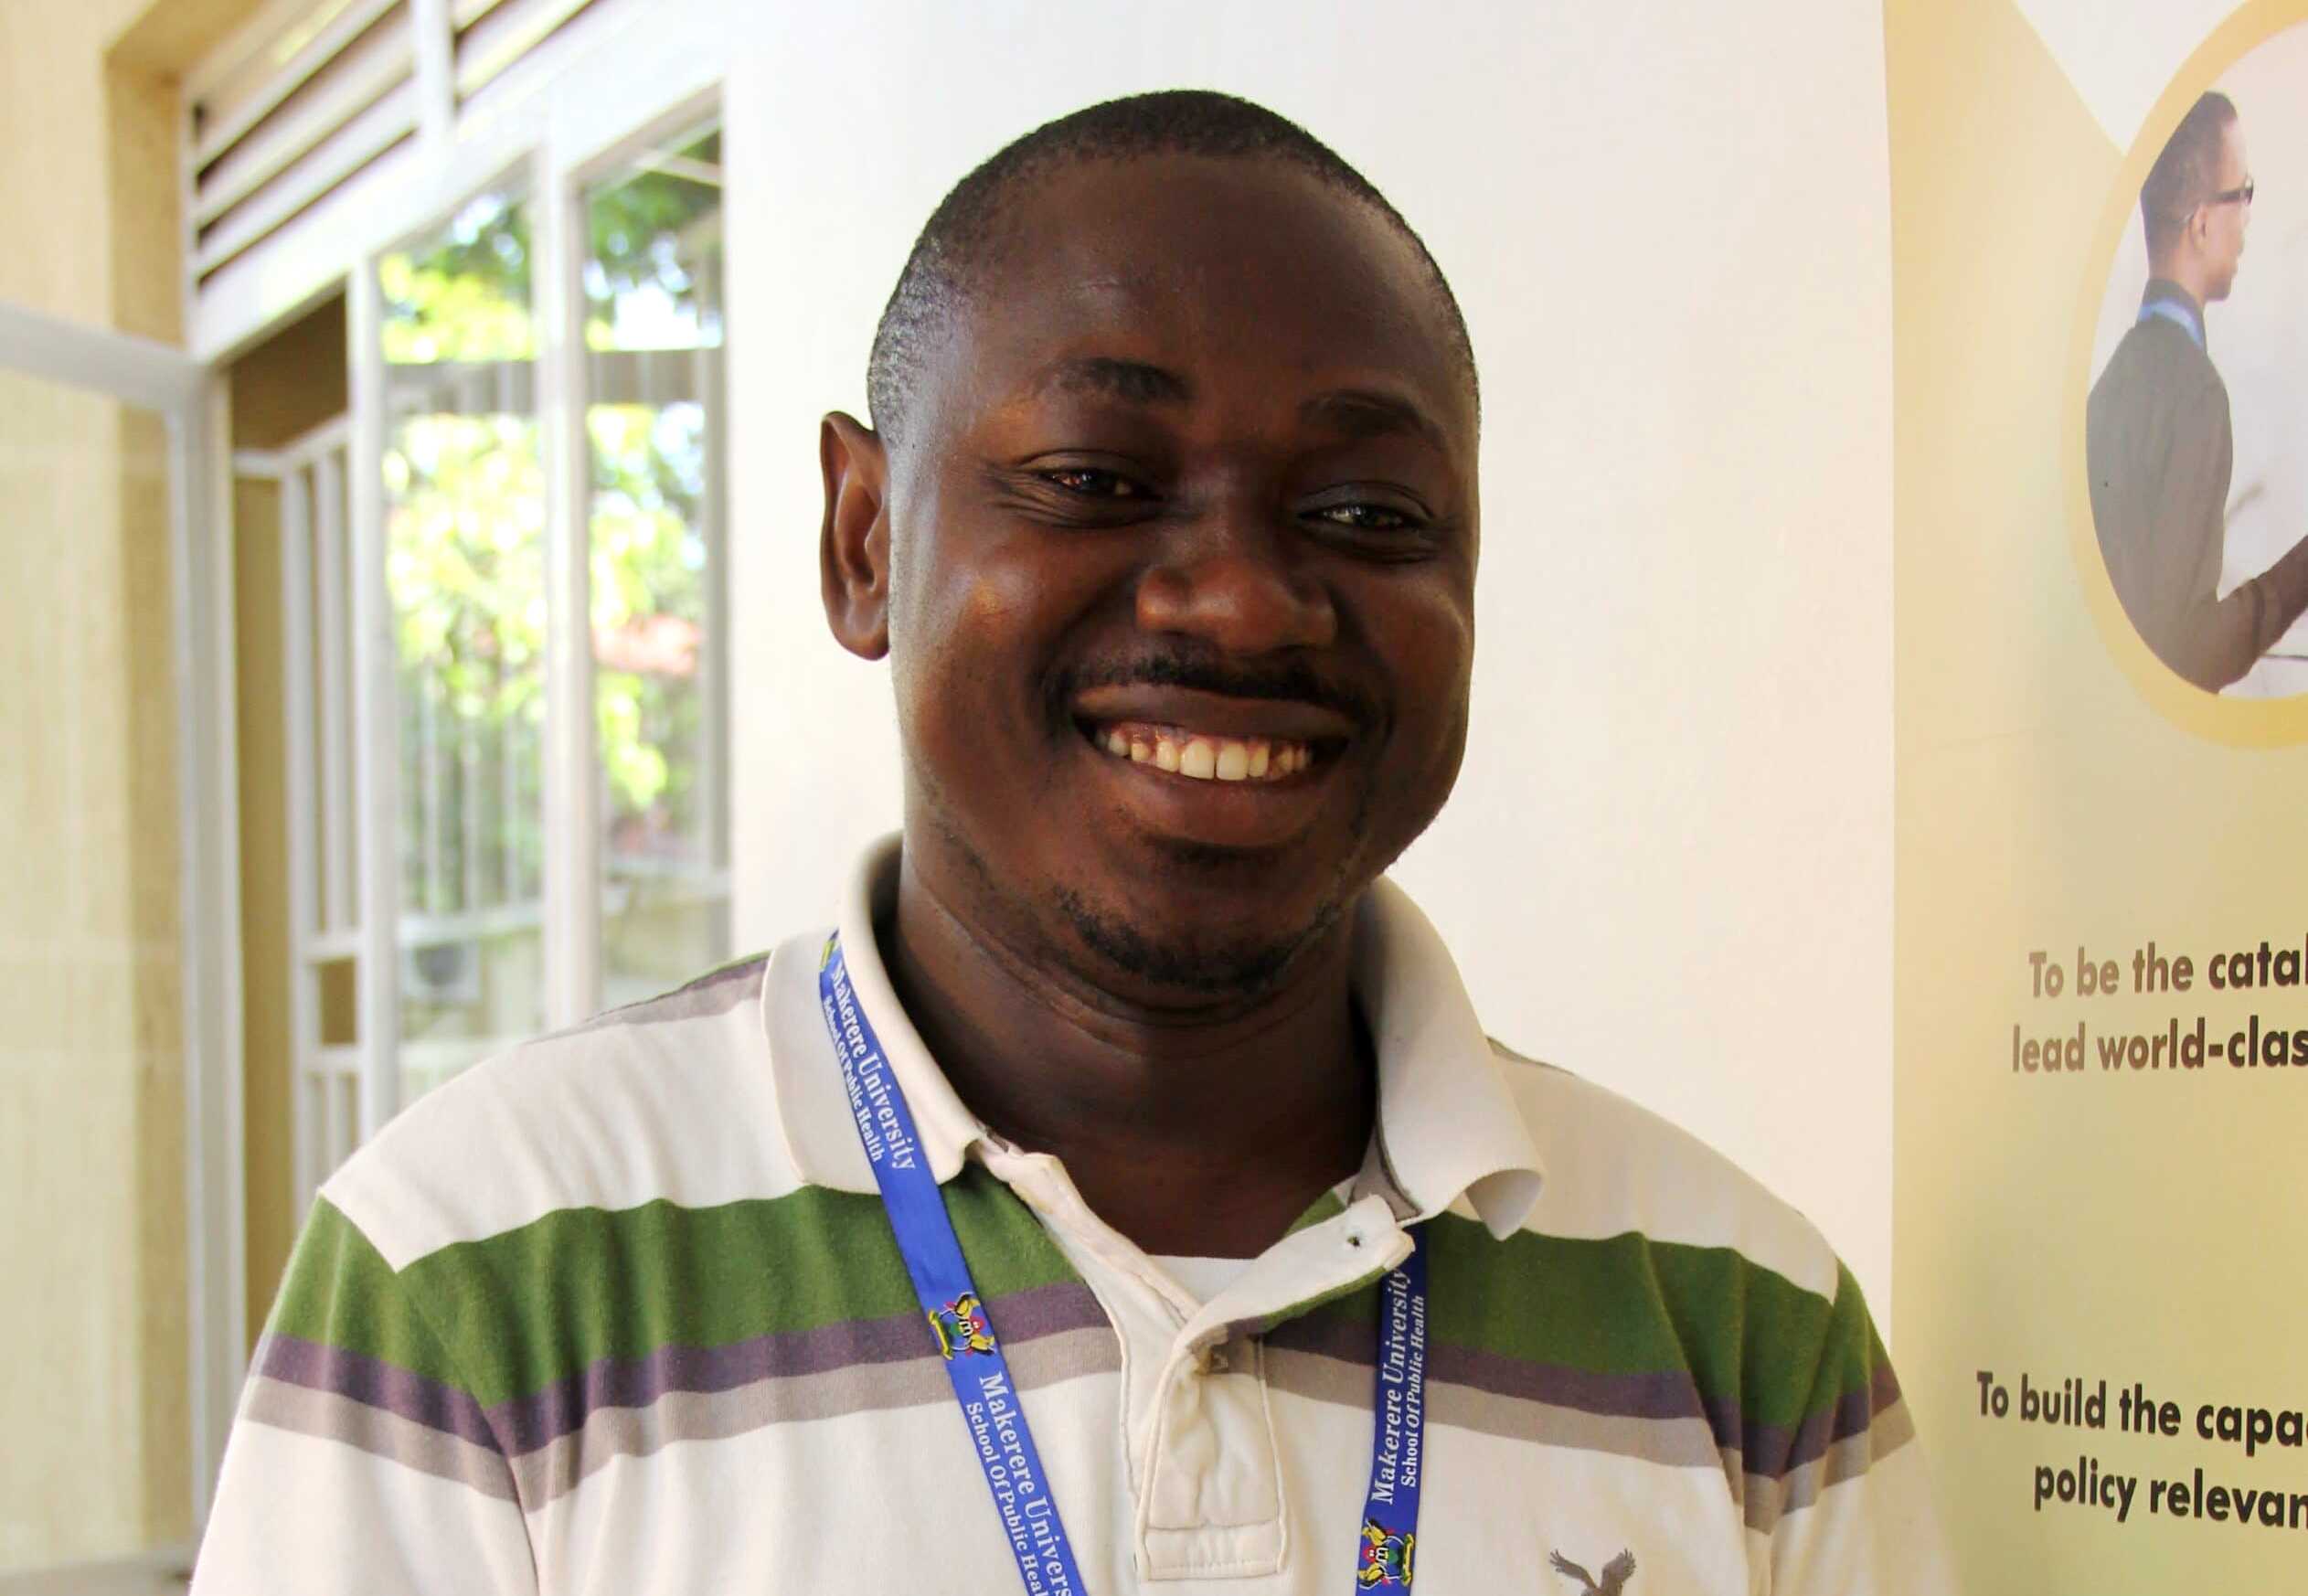 Alexander Kagaha, CARTA Cohort 7 graduate, Makerere University, Kampala Uganda, East Africa. Photo; CARTA